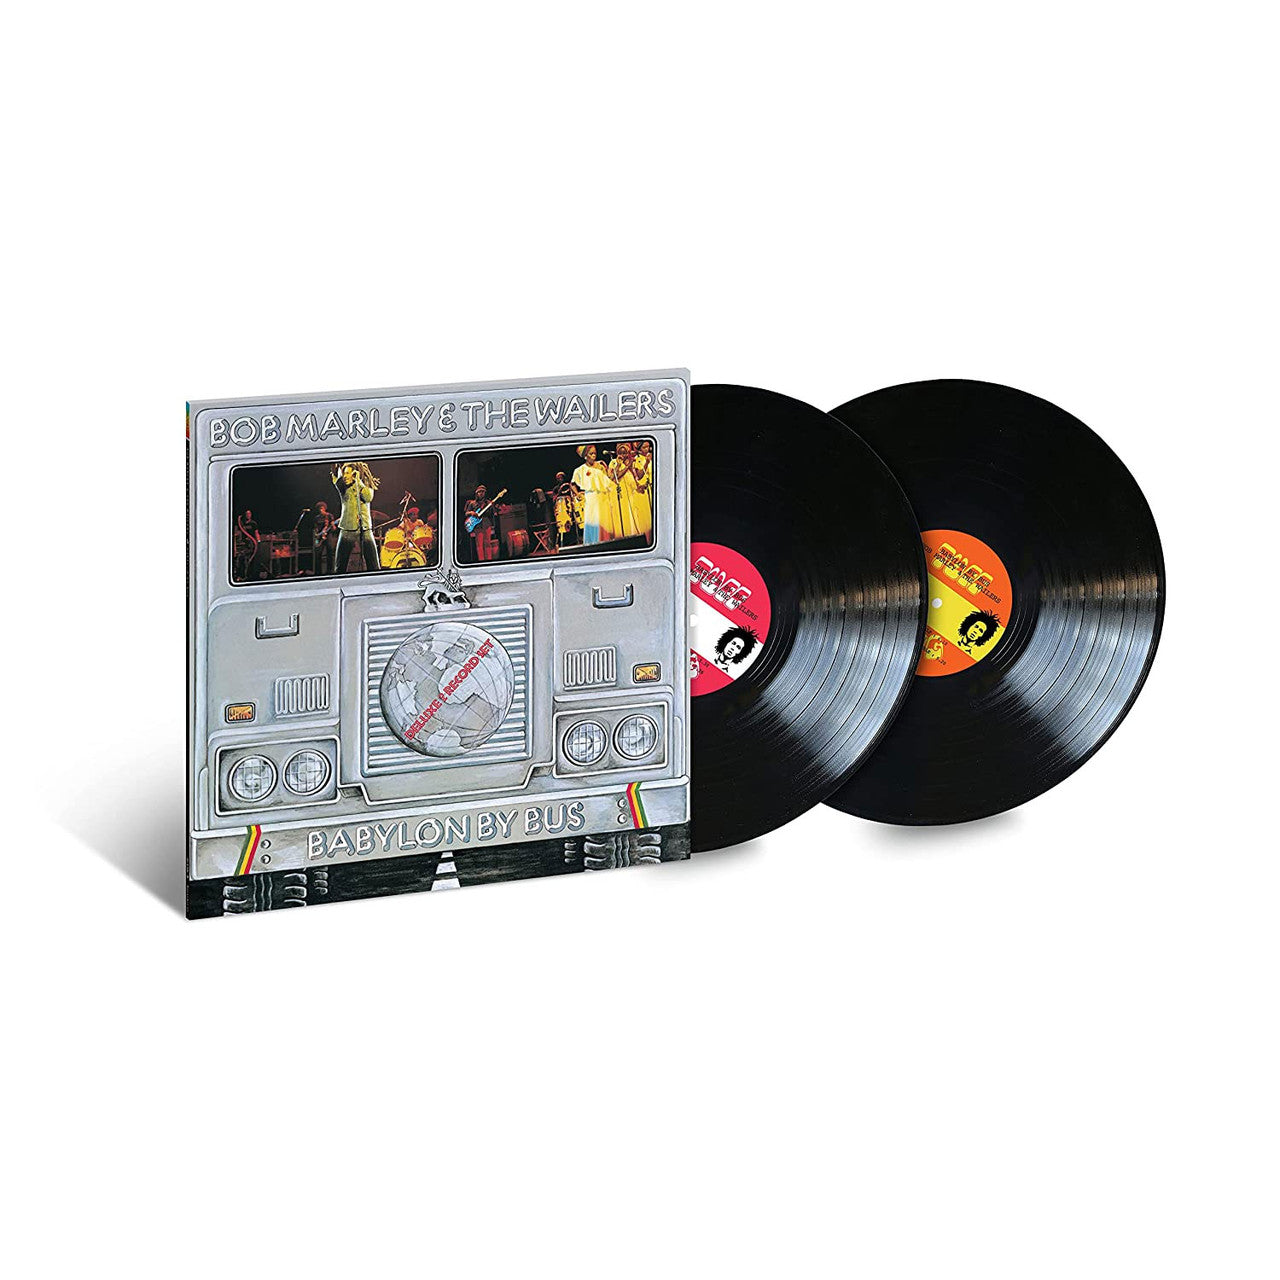 Bob Marley & the Wailers - Babylon by Bus - Tuff Gong LP